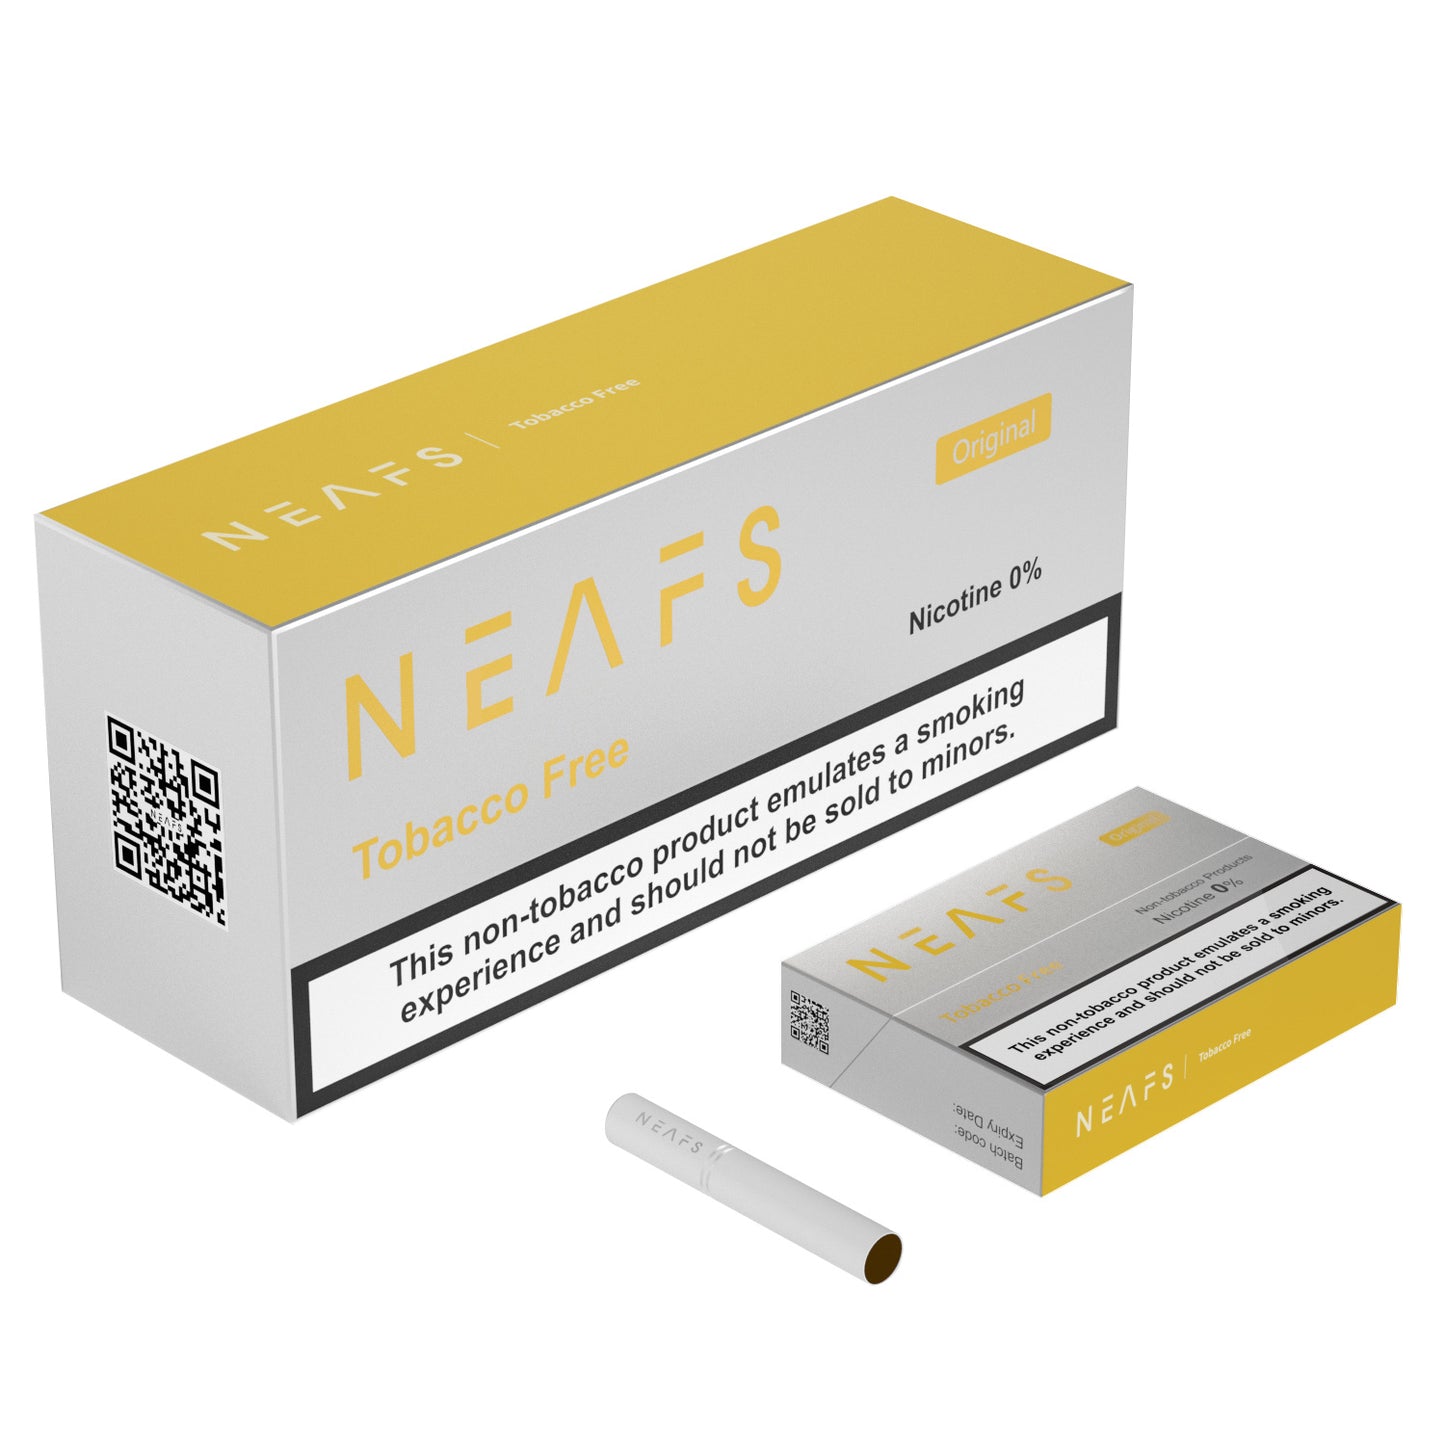 NEAFS Original Tobacco Free Heated Sticks